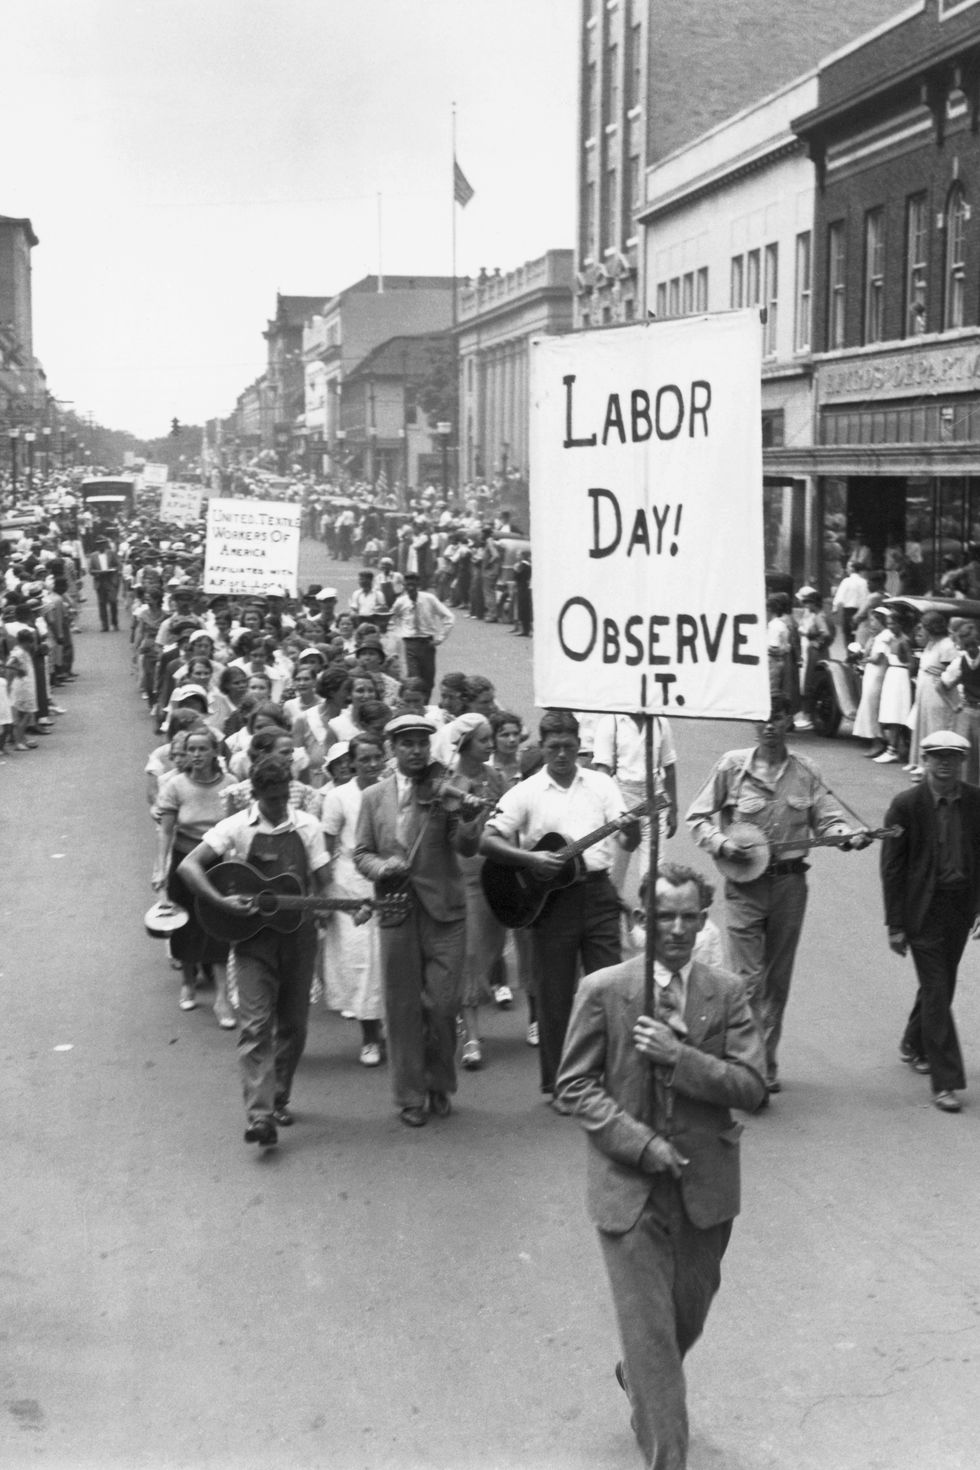 parade-labor-day-trivia-1535481534.jpg?c